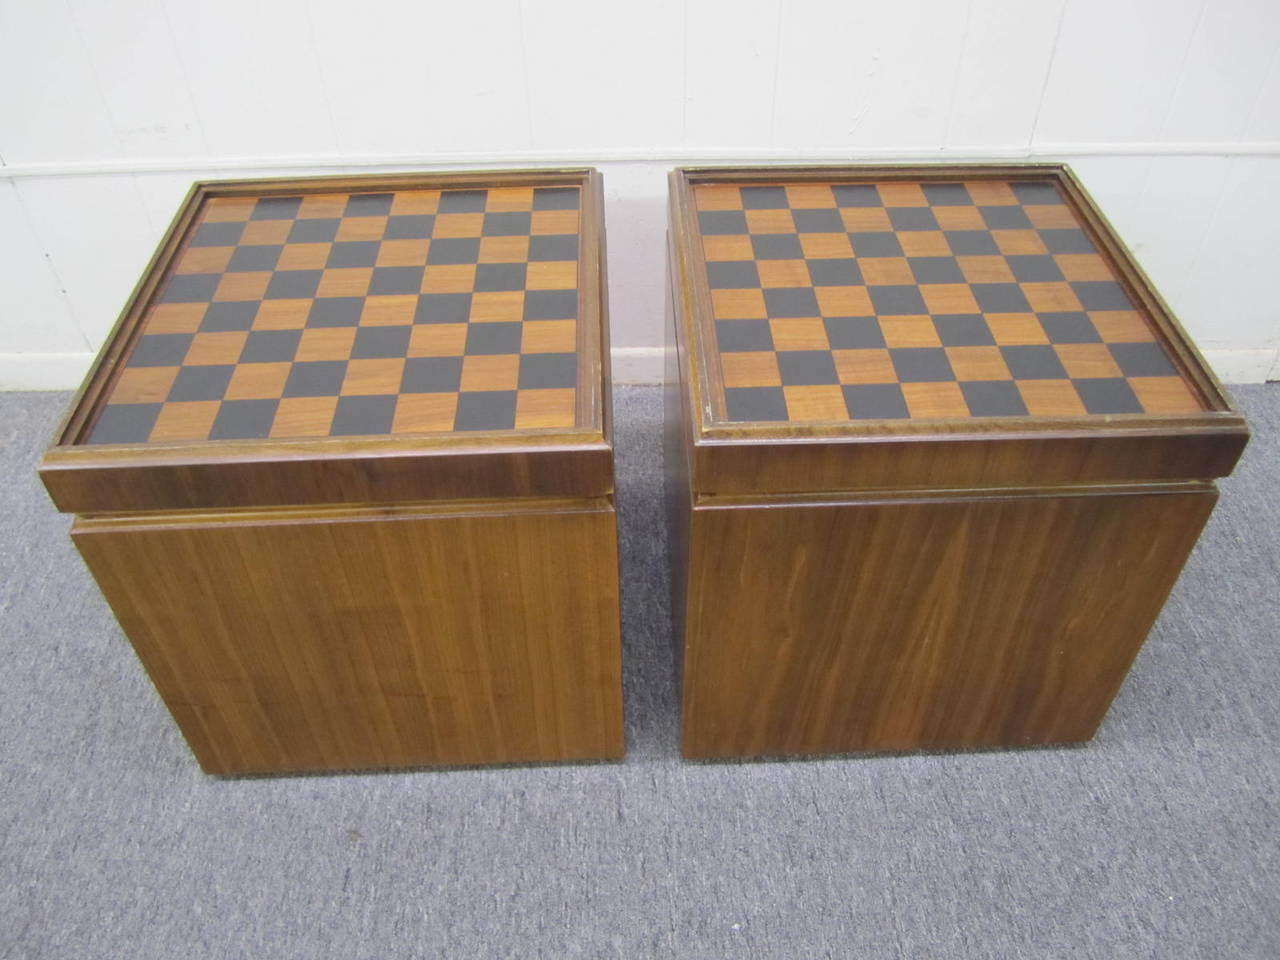 wood box stool